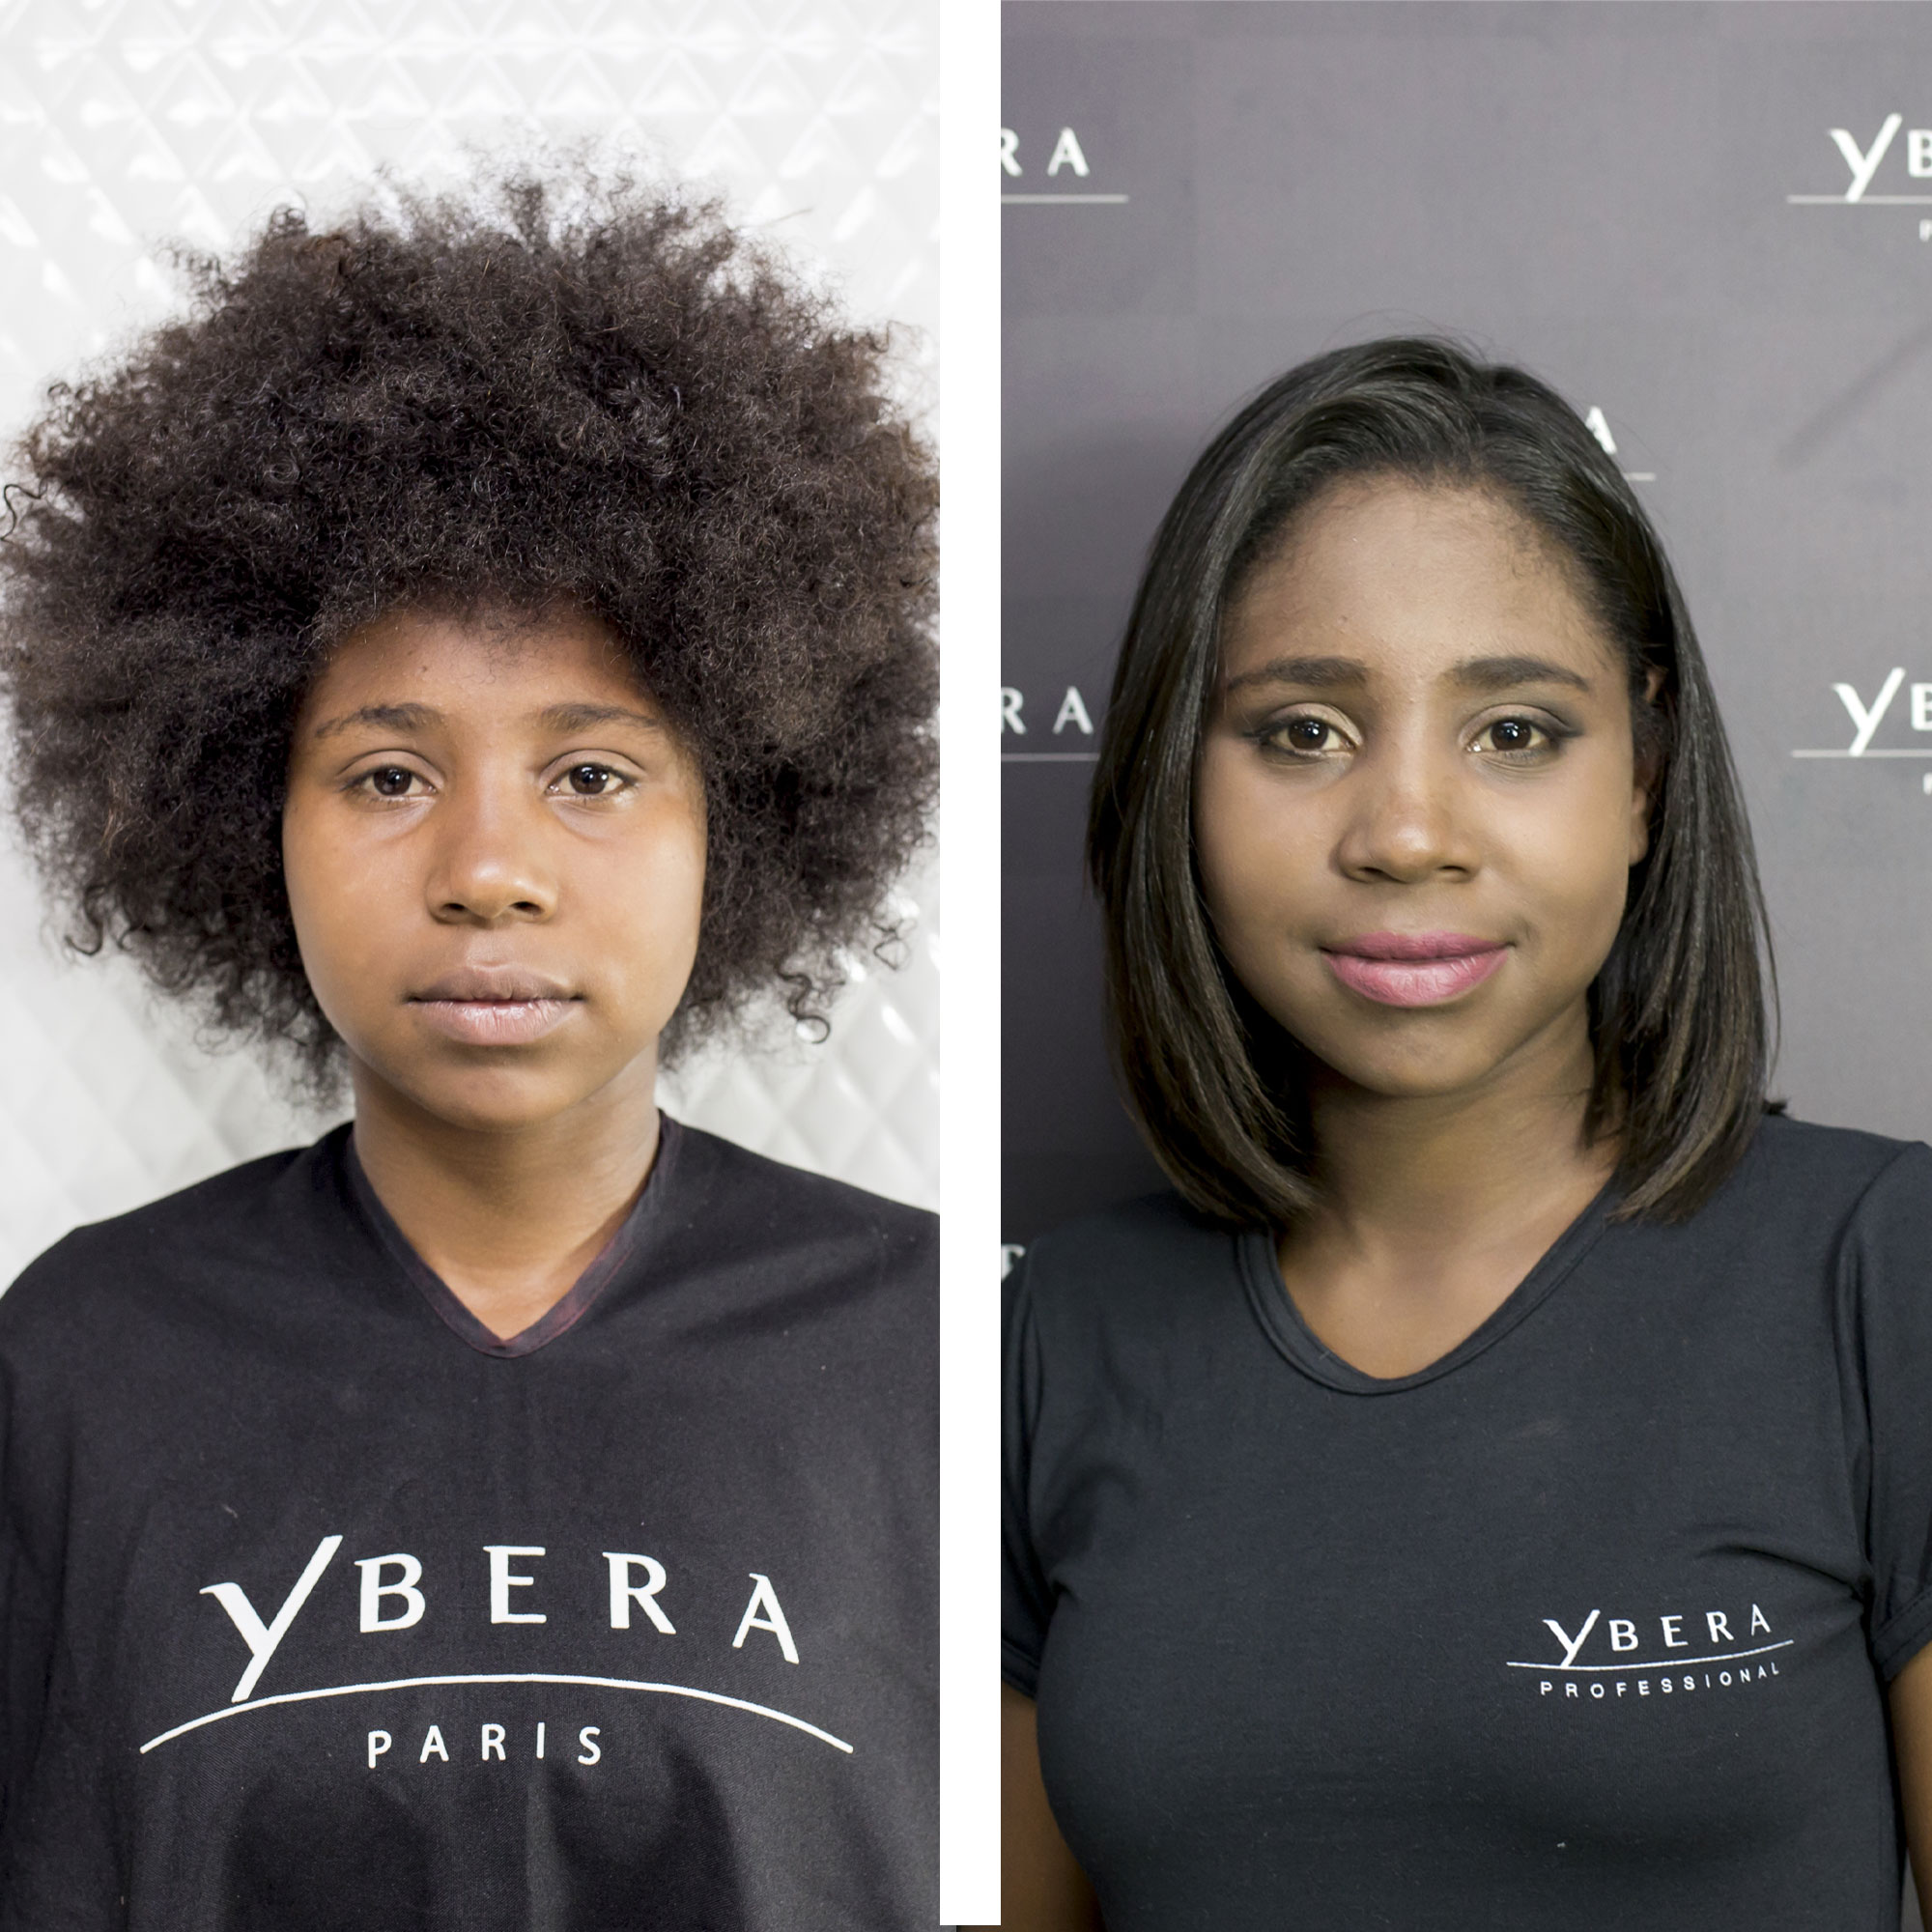 Kit Ybera Black Diva 17 oz - Ybera Paris USA